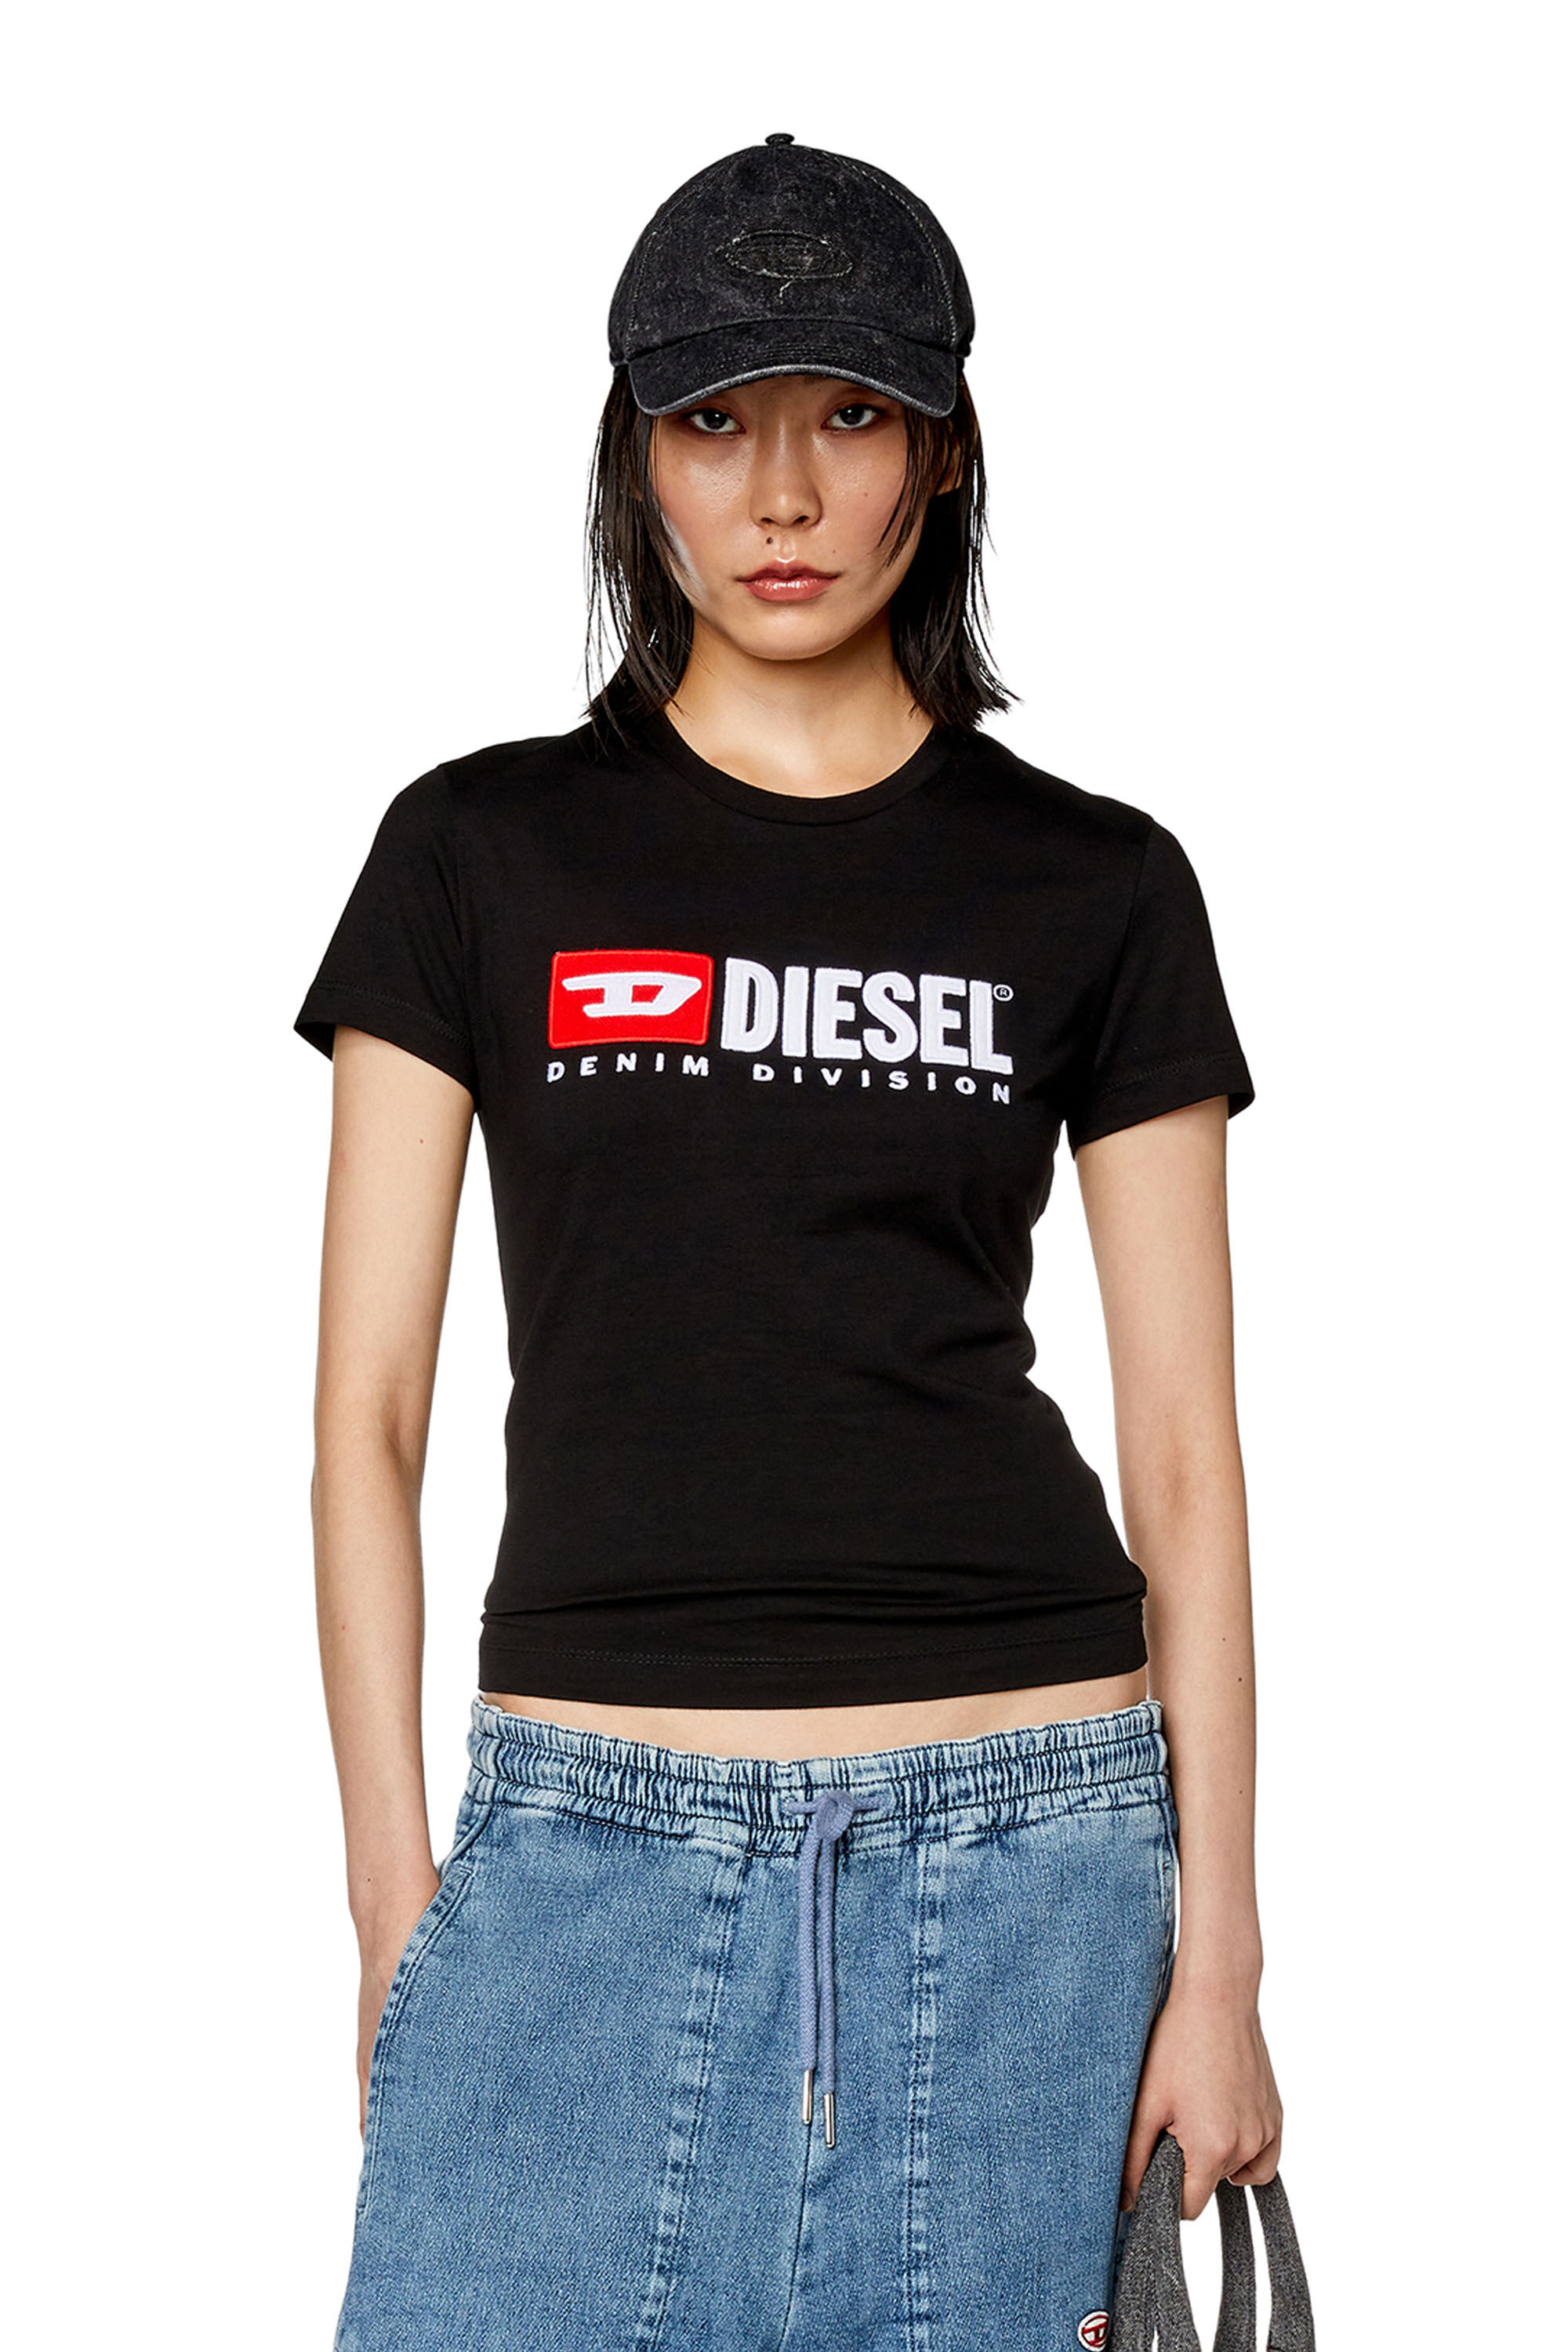 Diesel - T-SLI-DIV, Black - Image 3